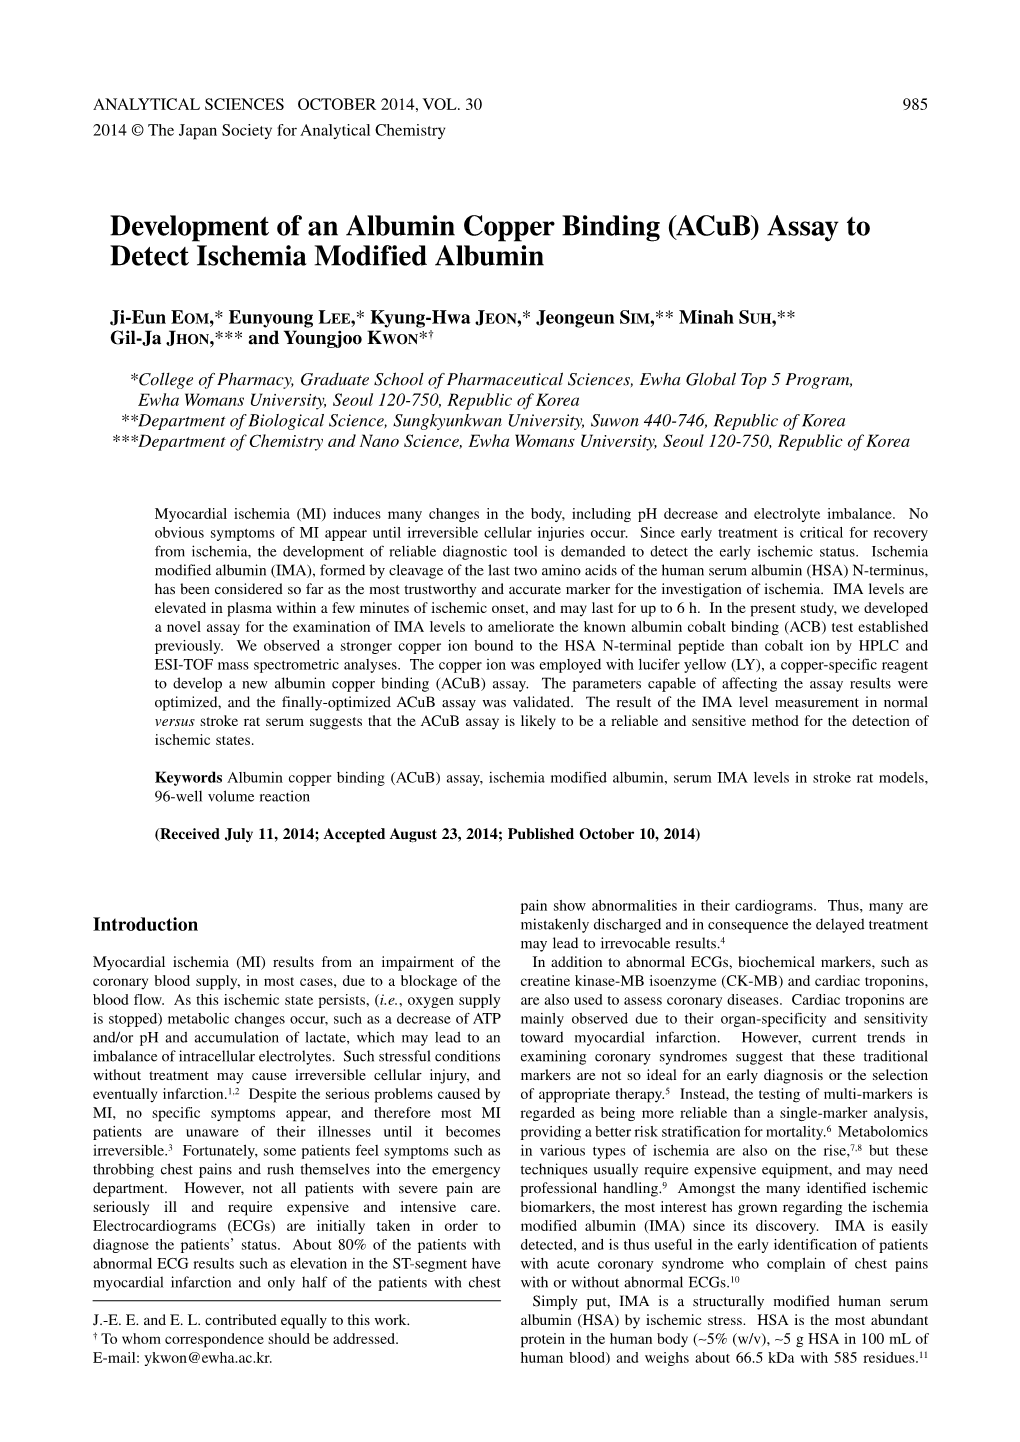 Development of an Albumin Copper Binding (Acub) Assay to Detect Ischemia Modified Albumin